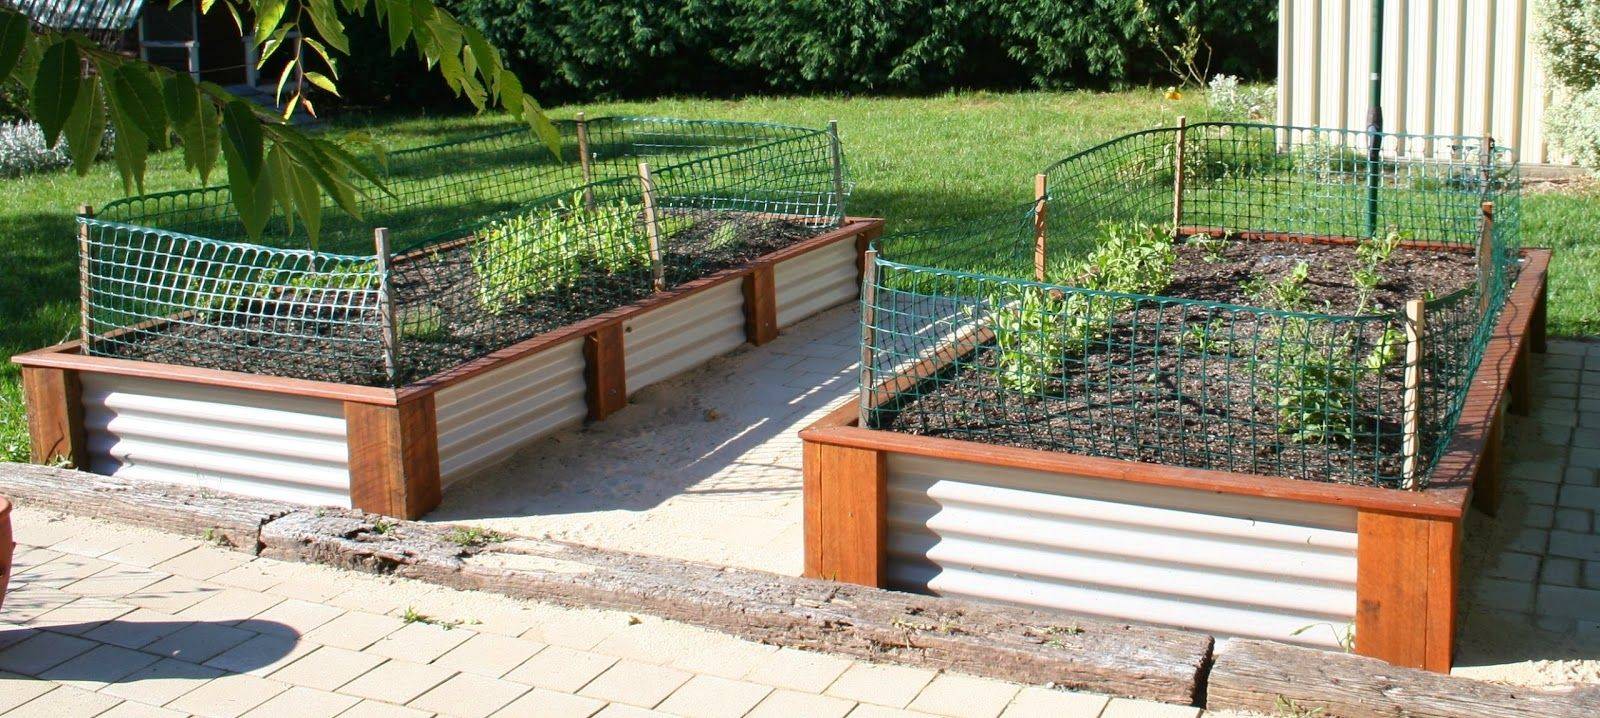 Best Corrugated Steel Raised Garden Bed Kit U Life